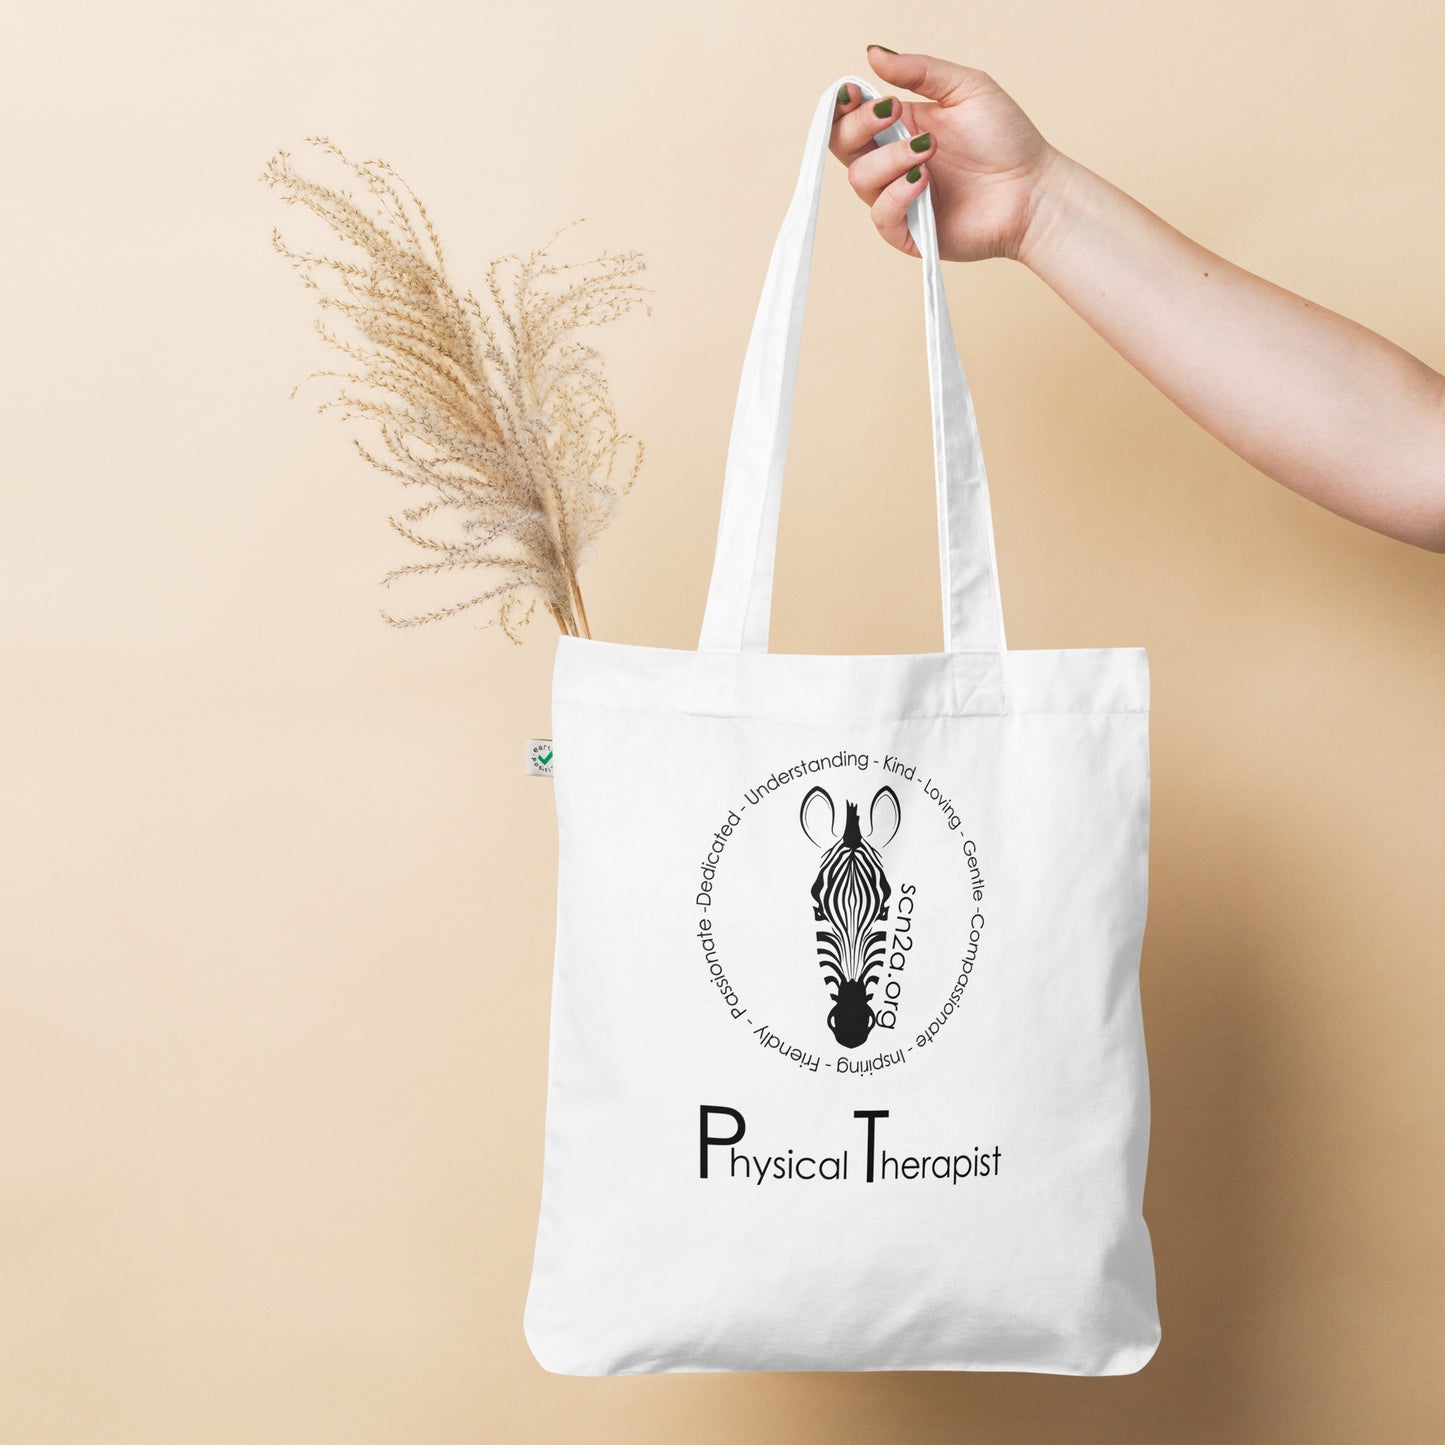 Physical Therapist Organic fashion tote bag